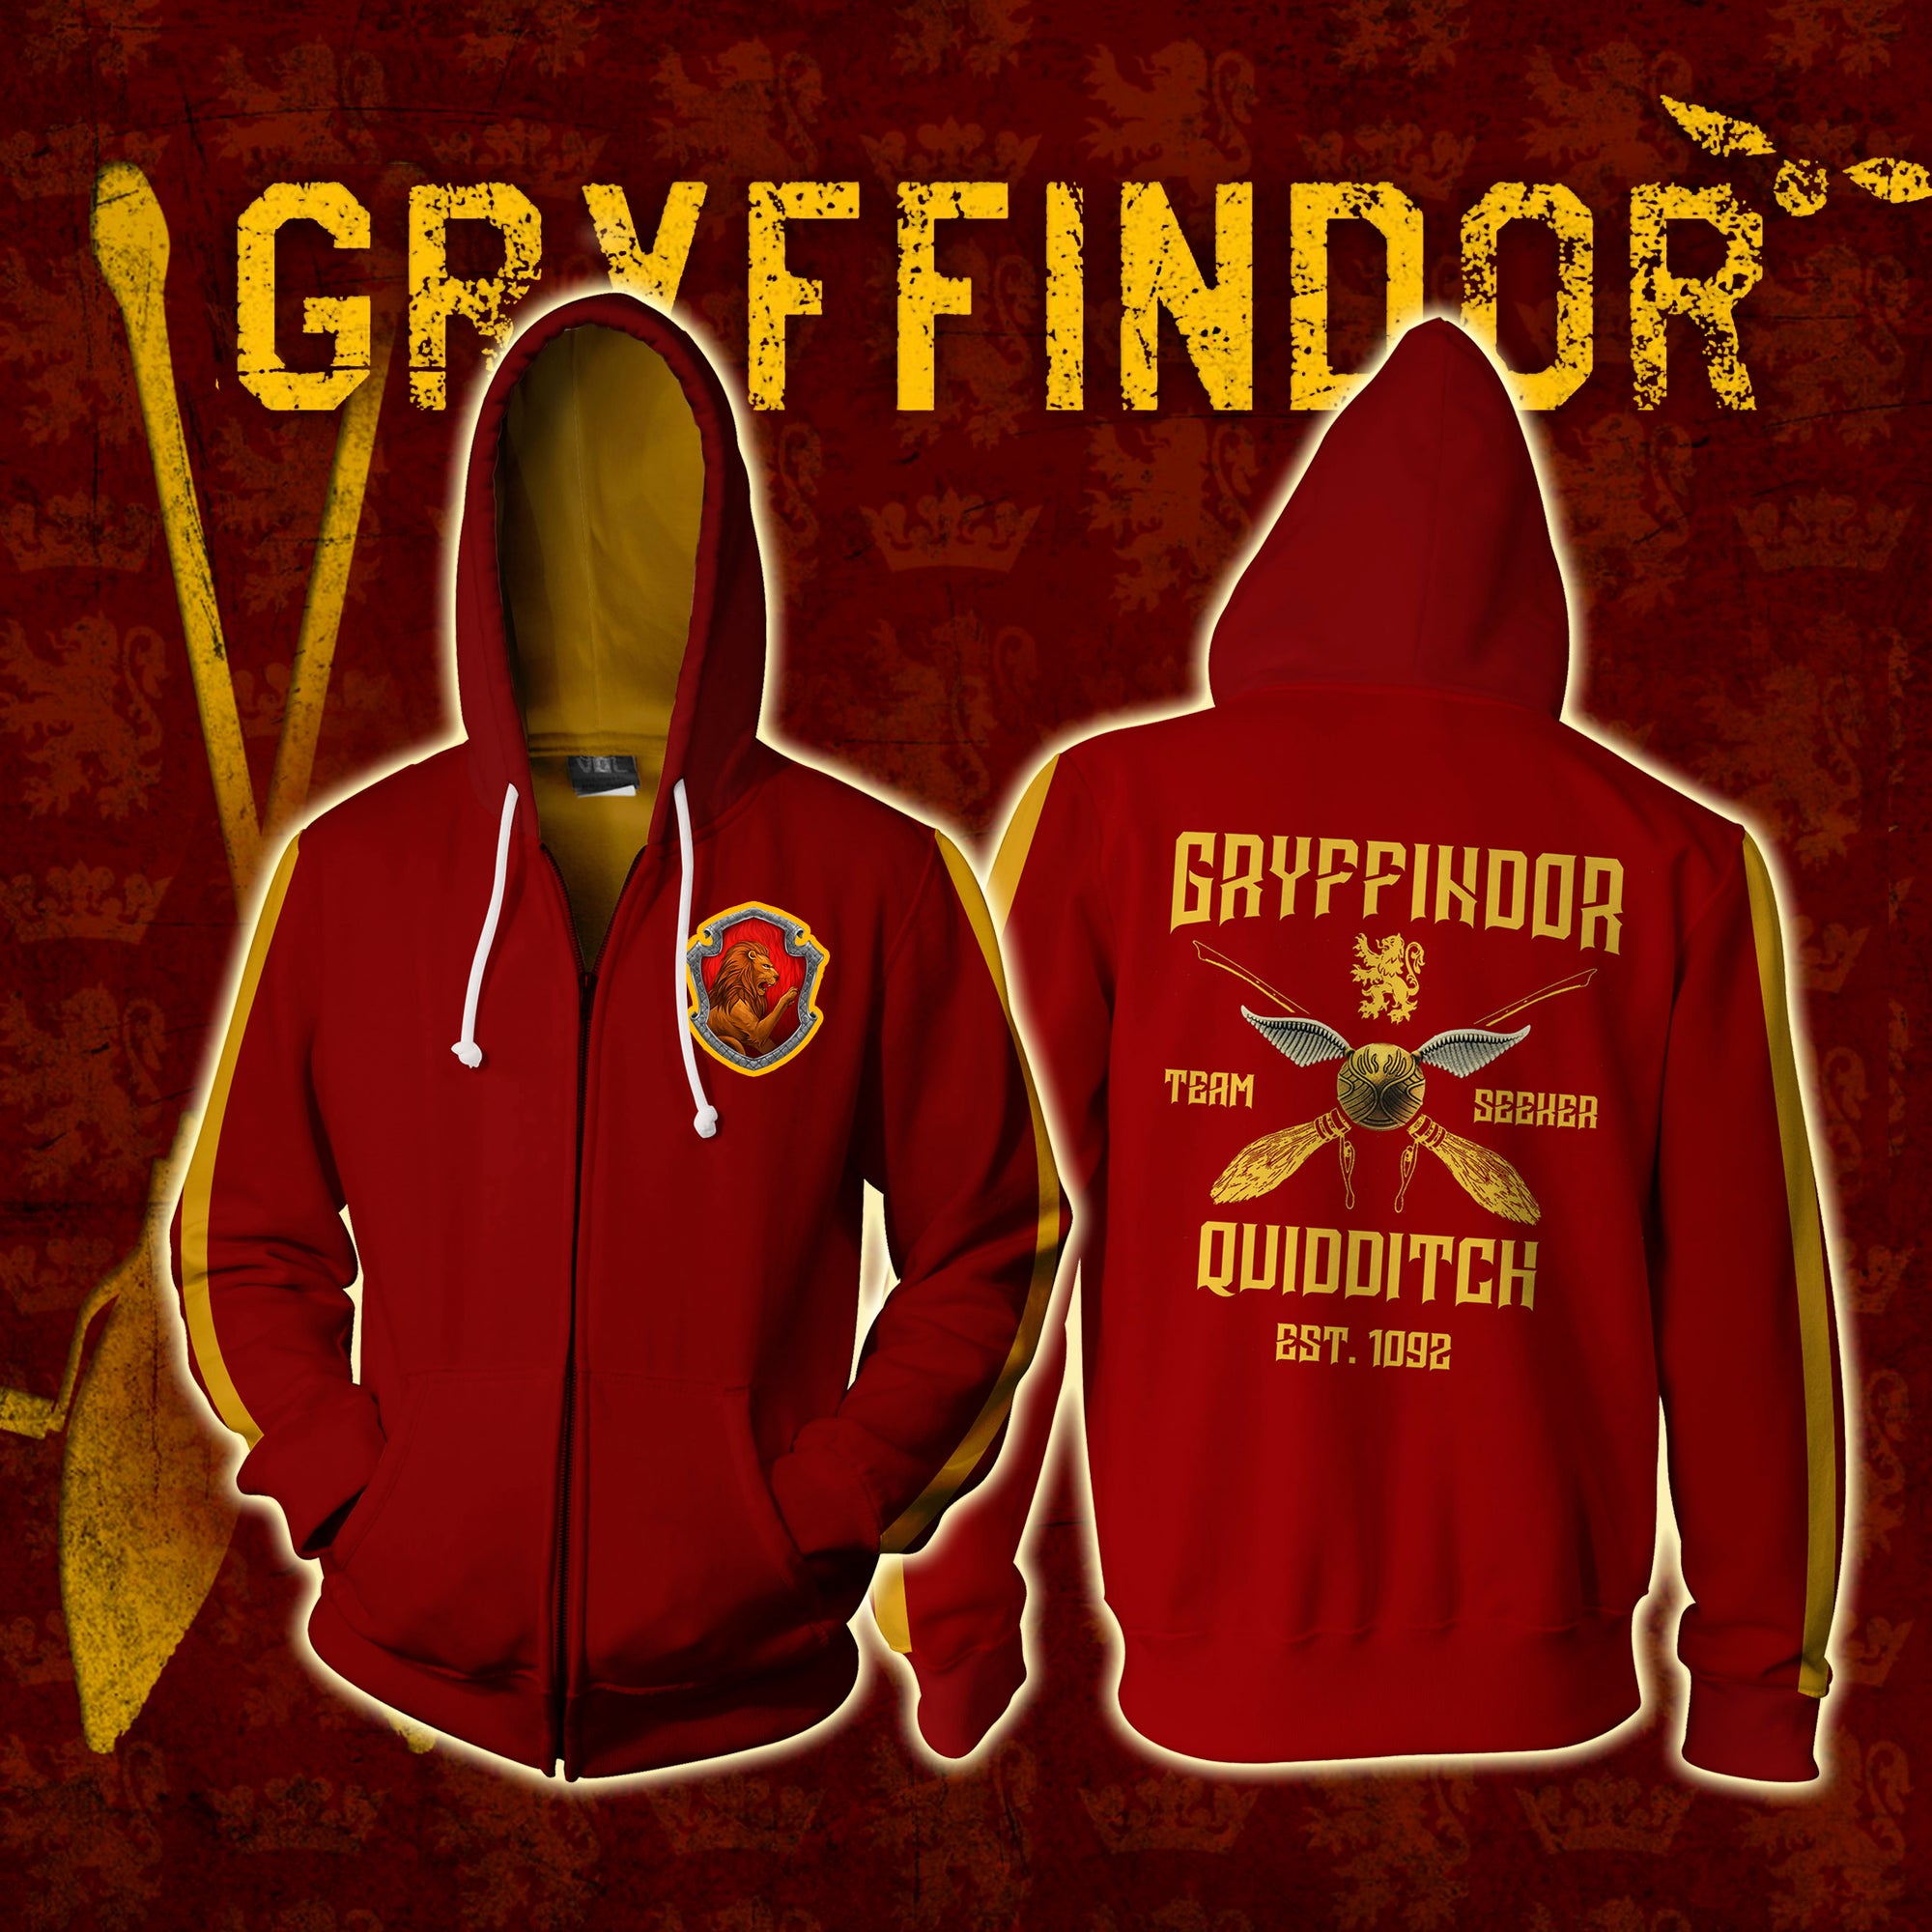 Gryffindor Quidditch Team Est 1092 Harry Potter Zip Up Hoodie